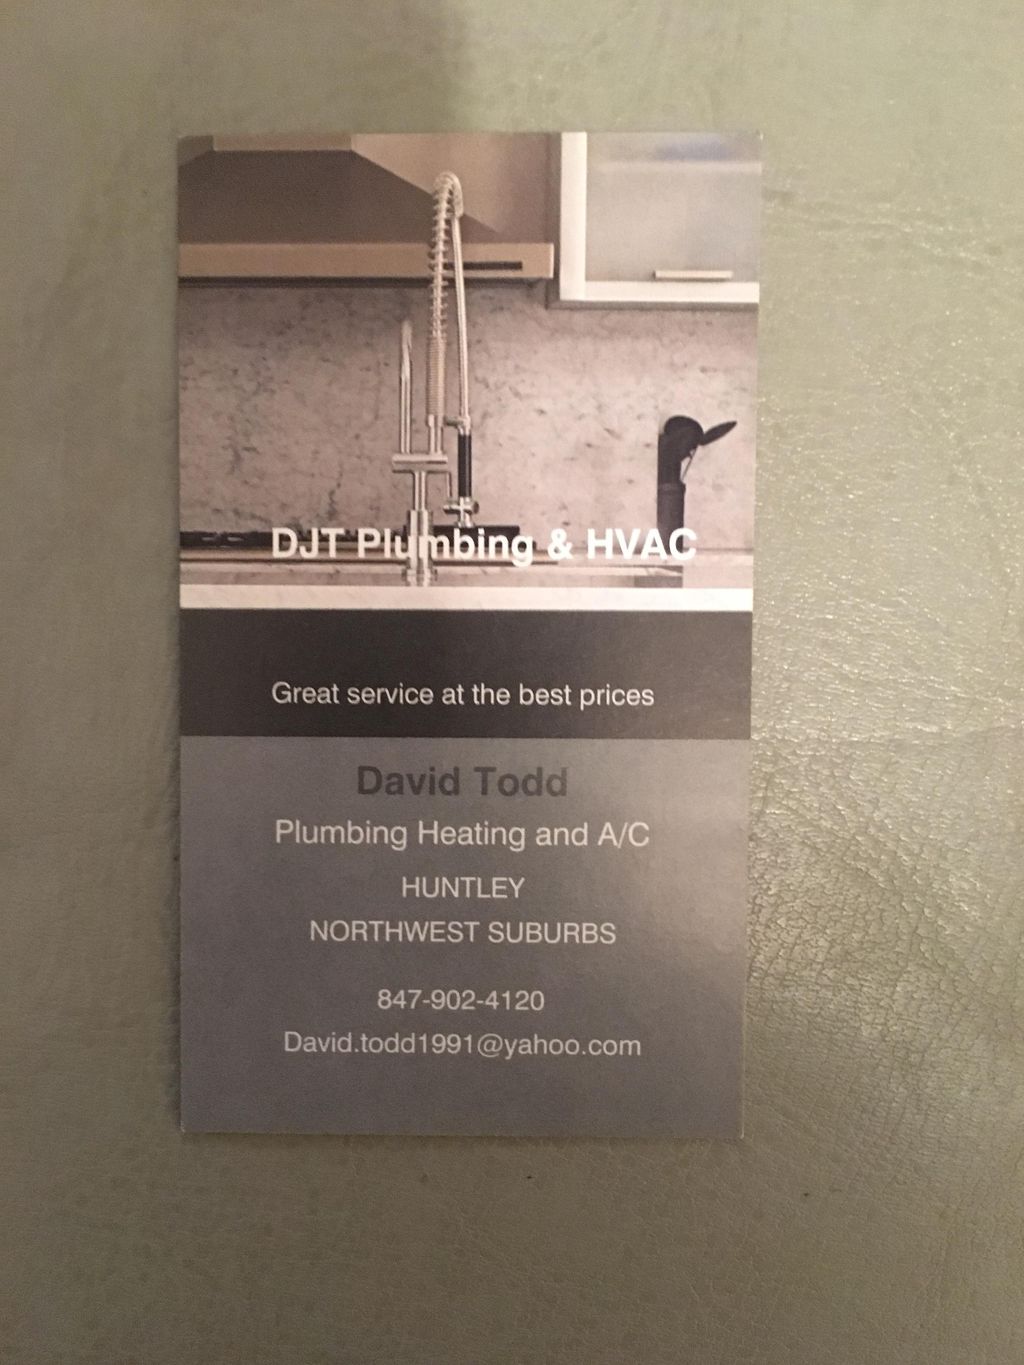 DJT  plumbing and HVAC